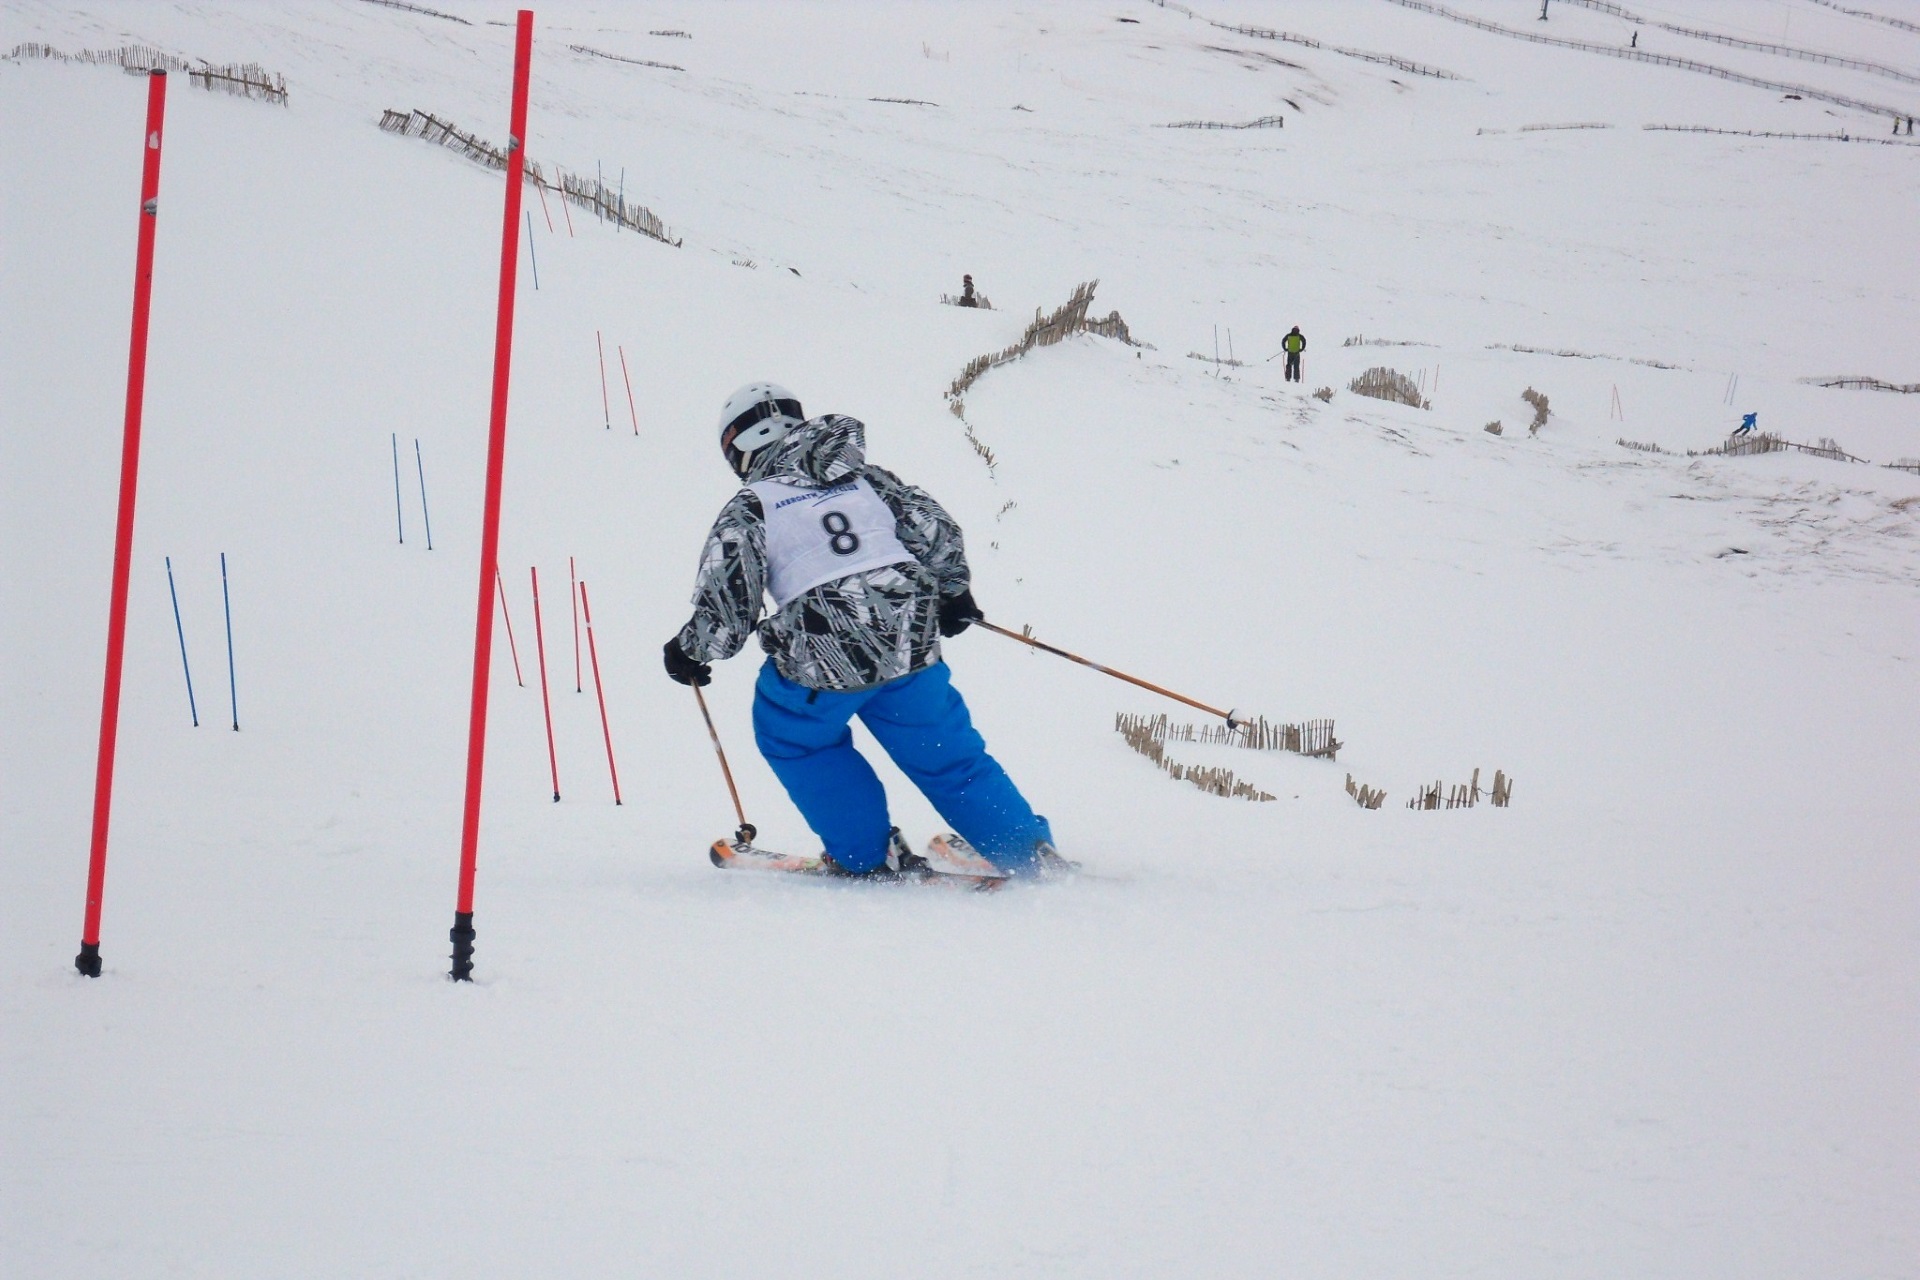 Glensheee skier